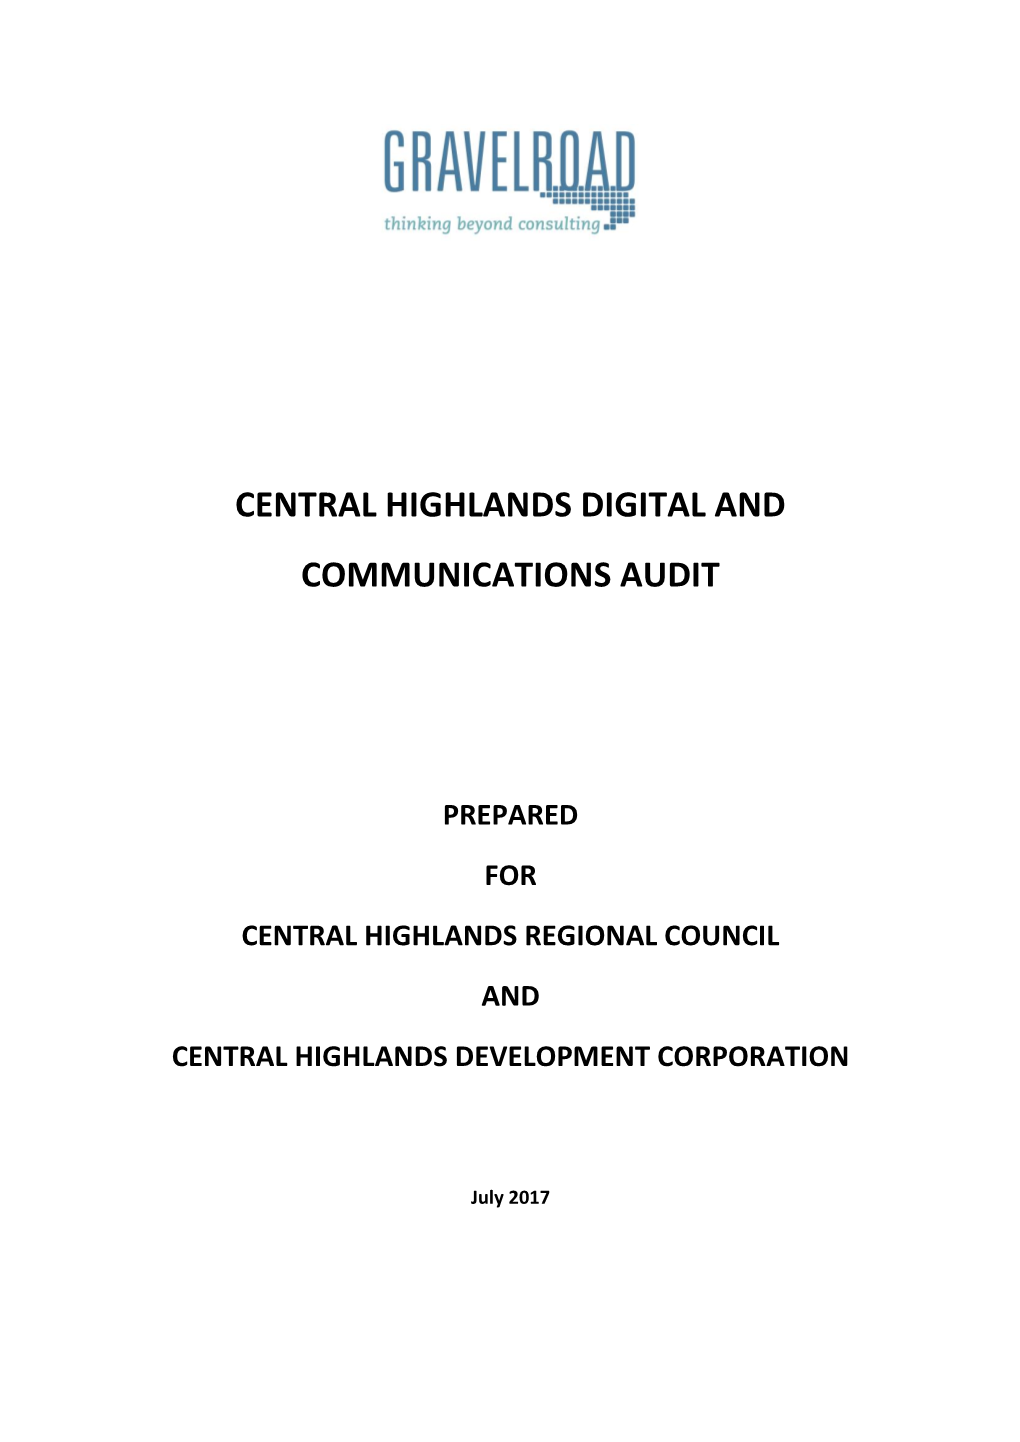 Central Highlands Digital and Communications Audit